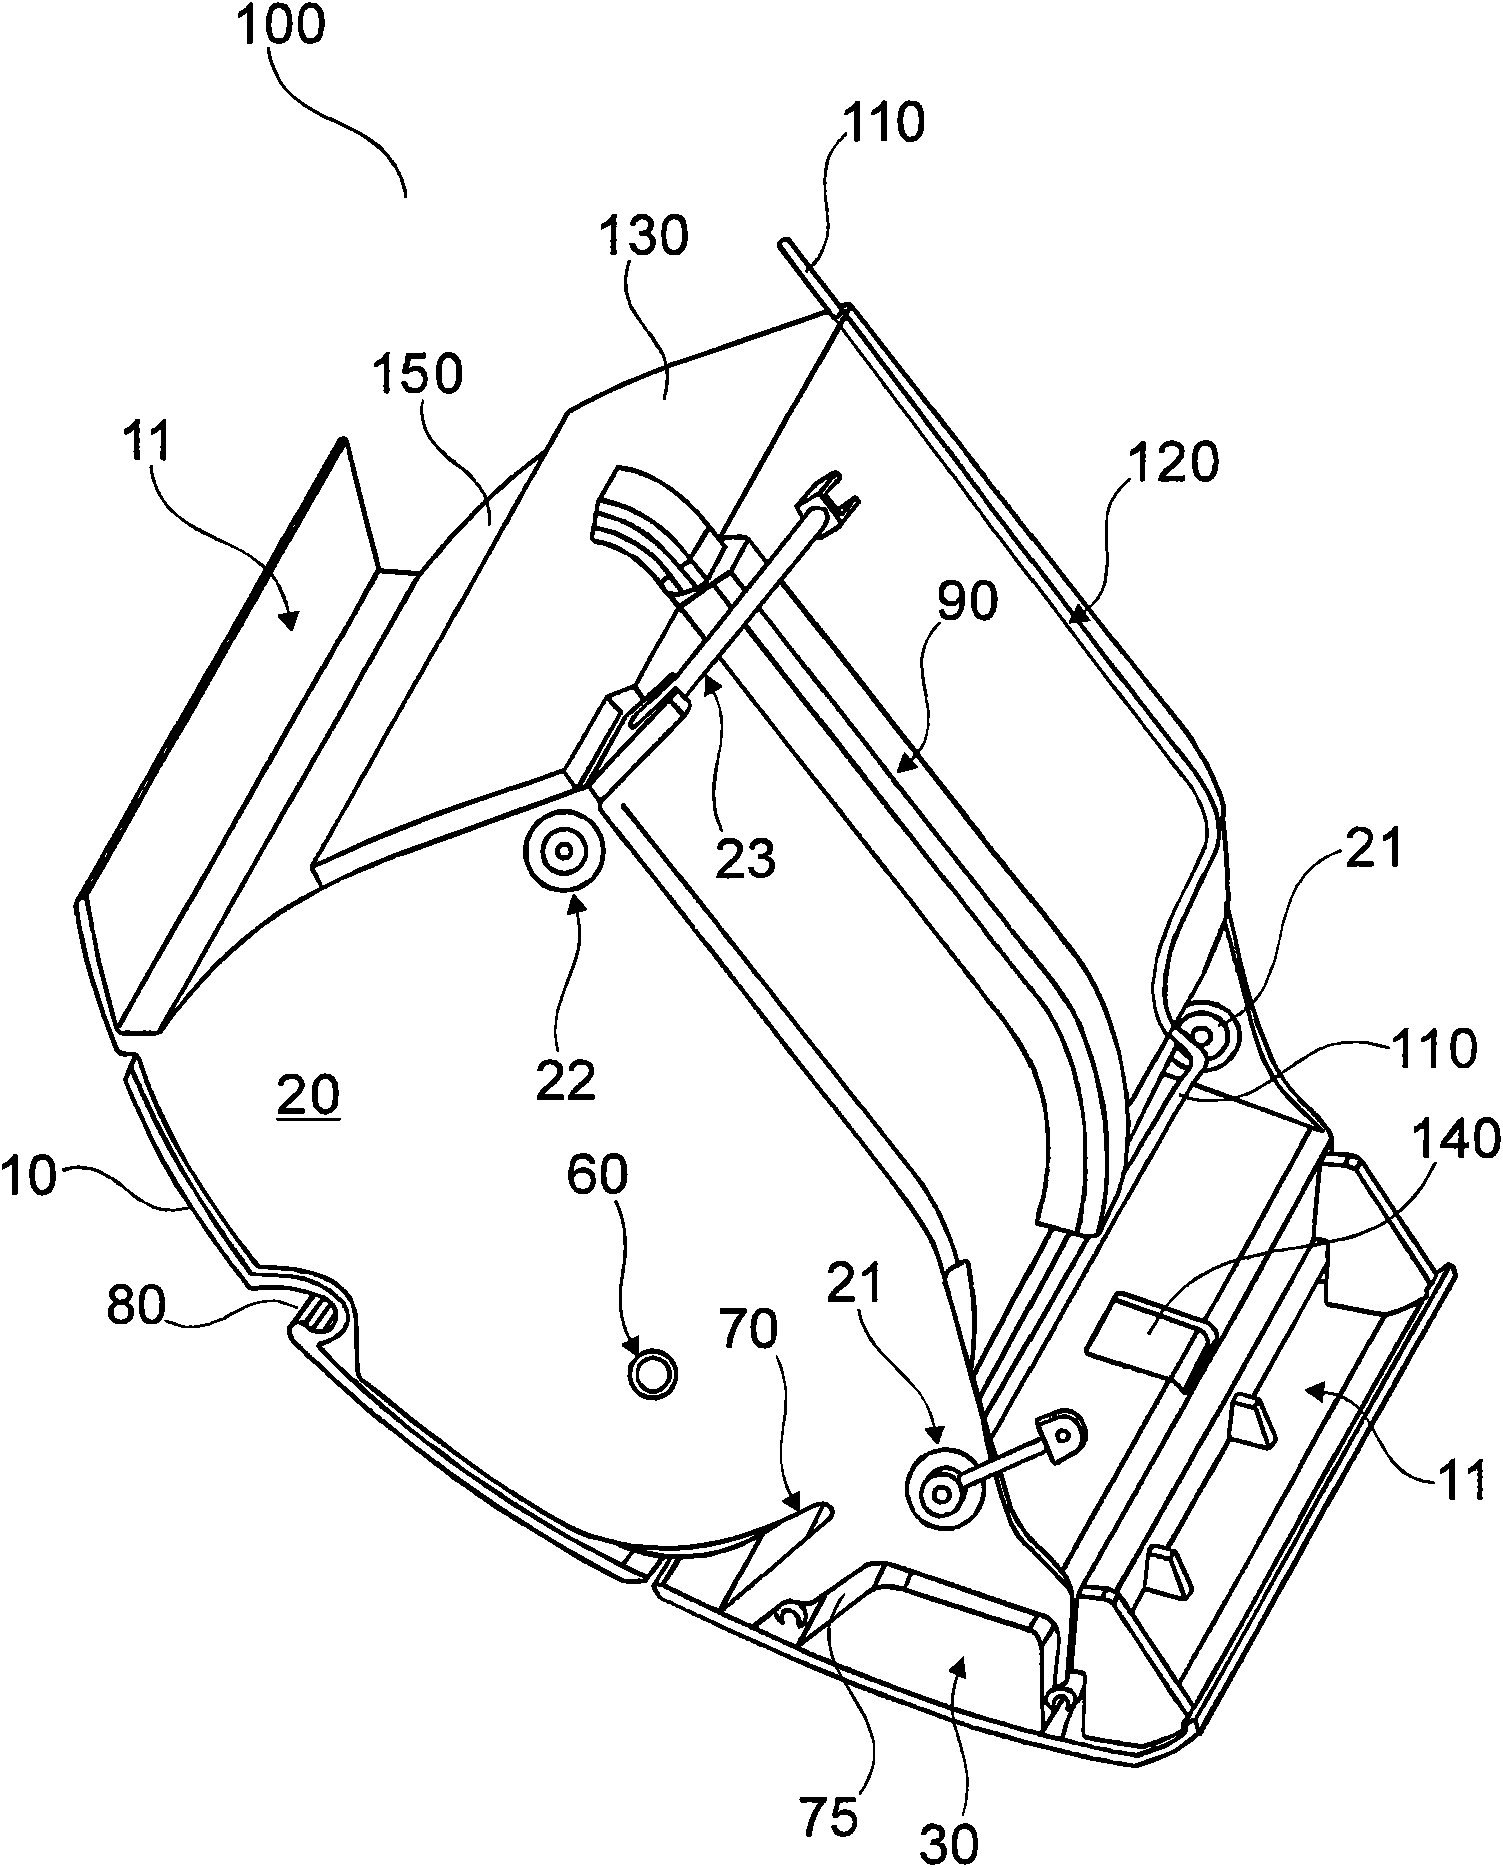 Modular hatrack for a passenger compartment of an aircraft